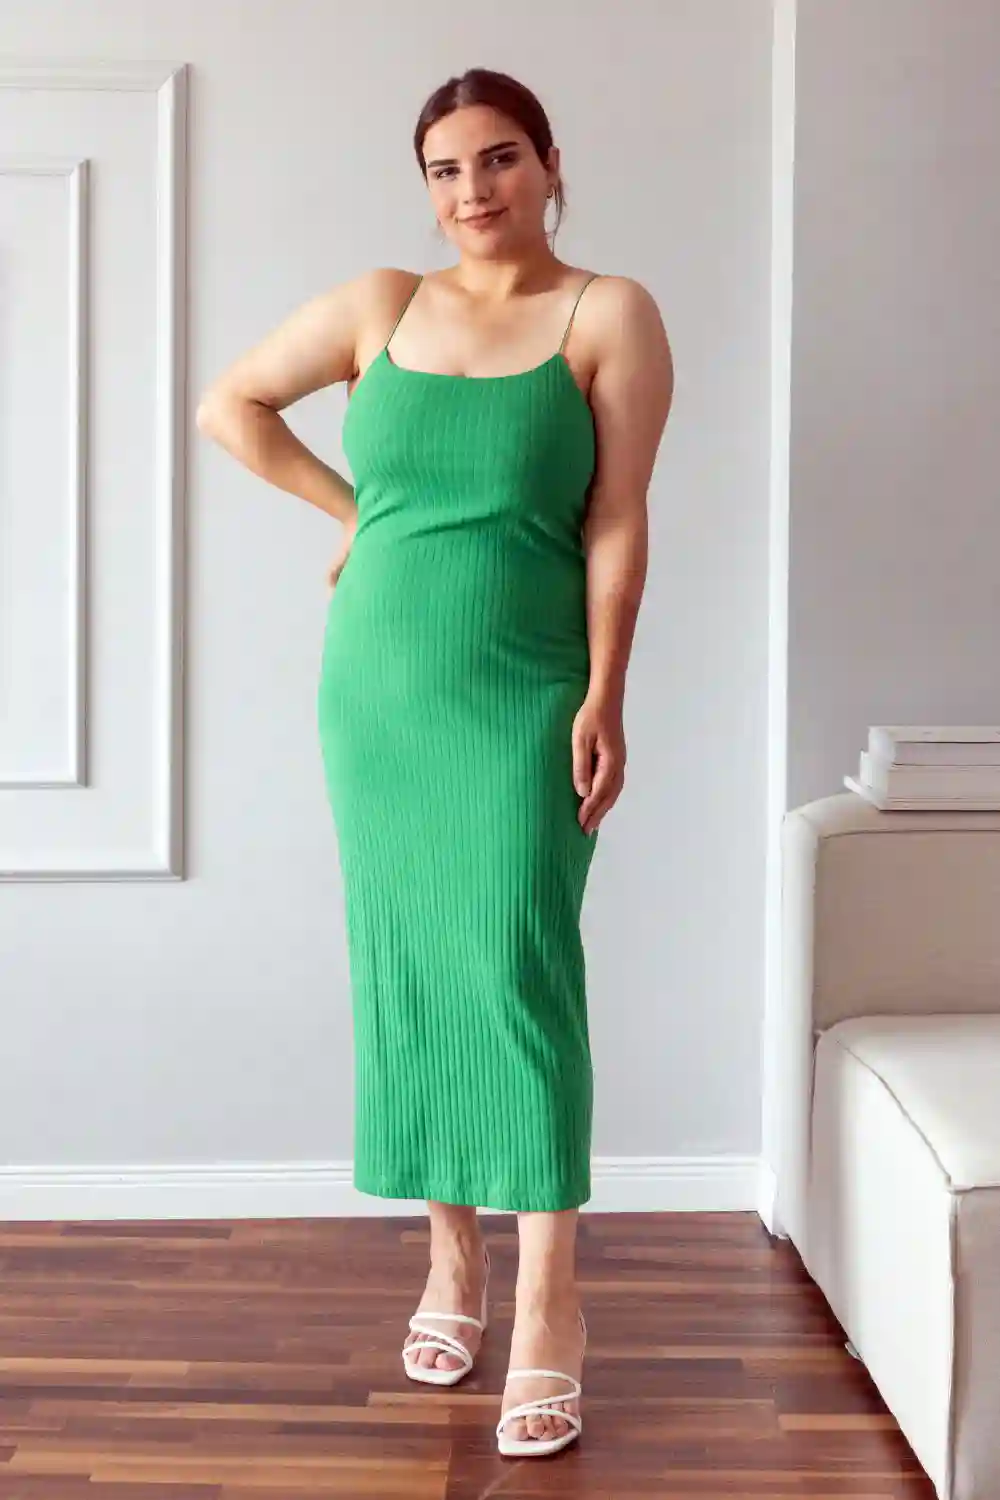 Woman Wearing a Green Dress